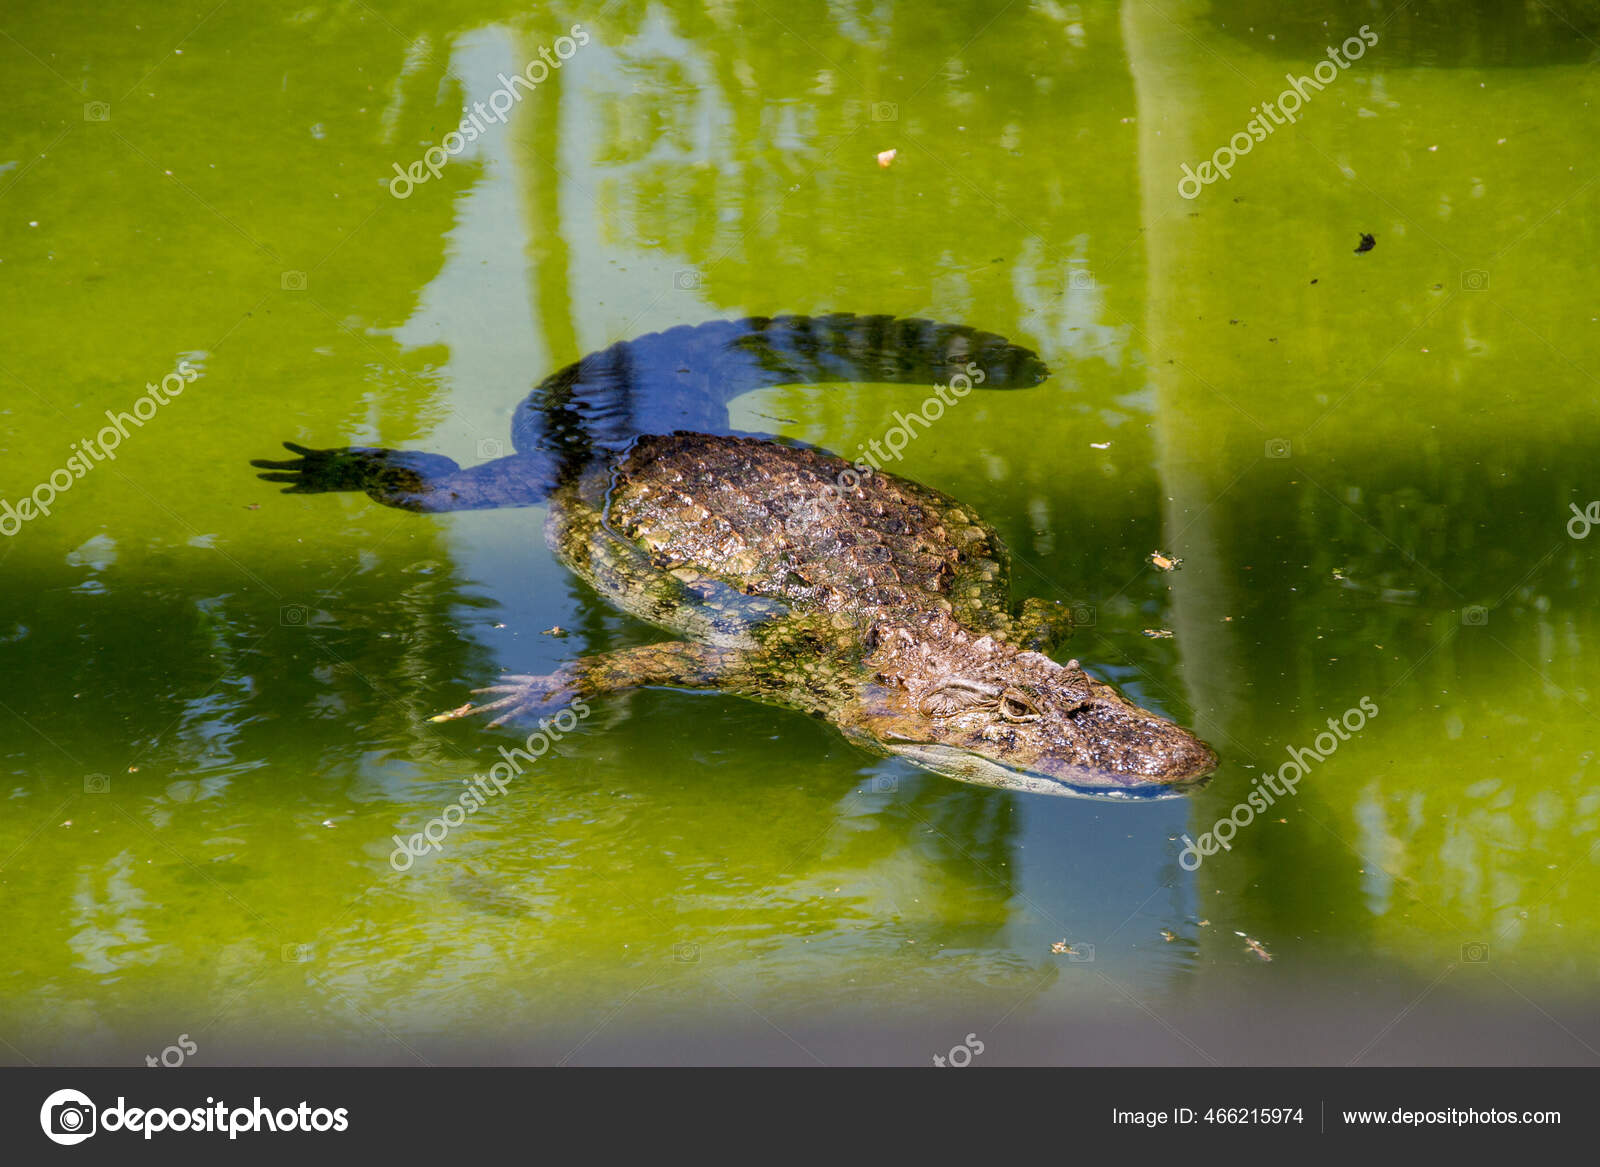 Crocodilean Stock Photos, Royalty Free Crocodilean Images | Depositphotos